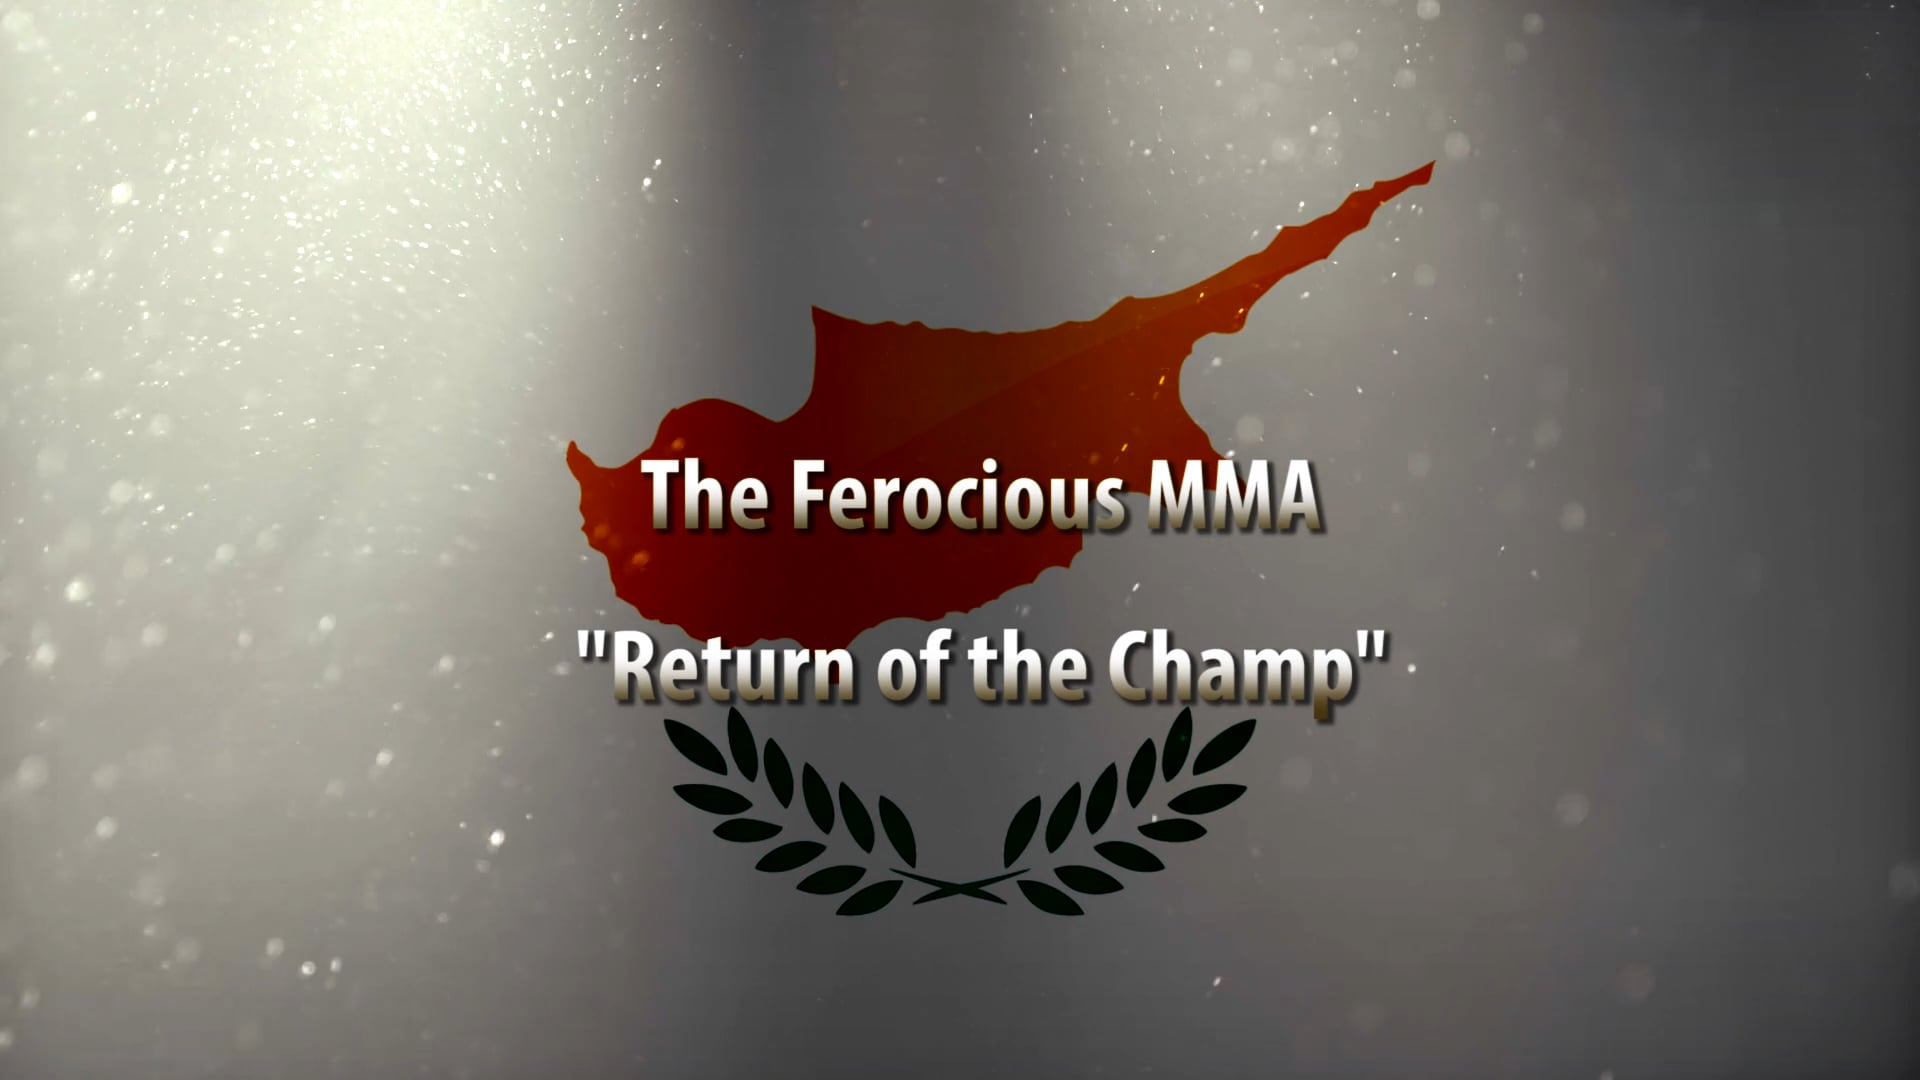 The Ferocious MMA "Return of the Champ"